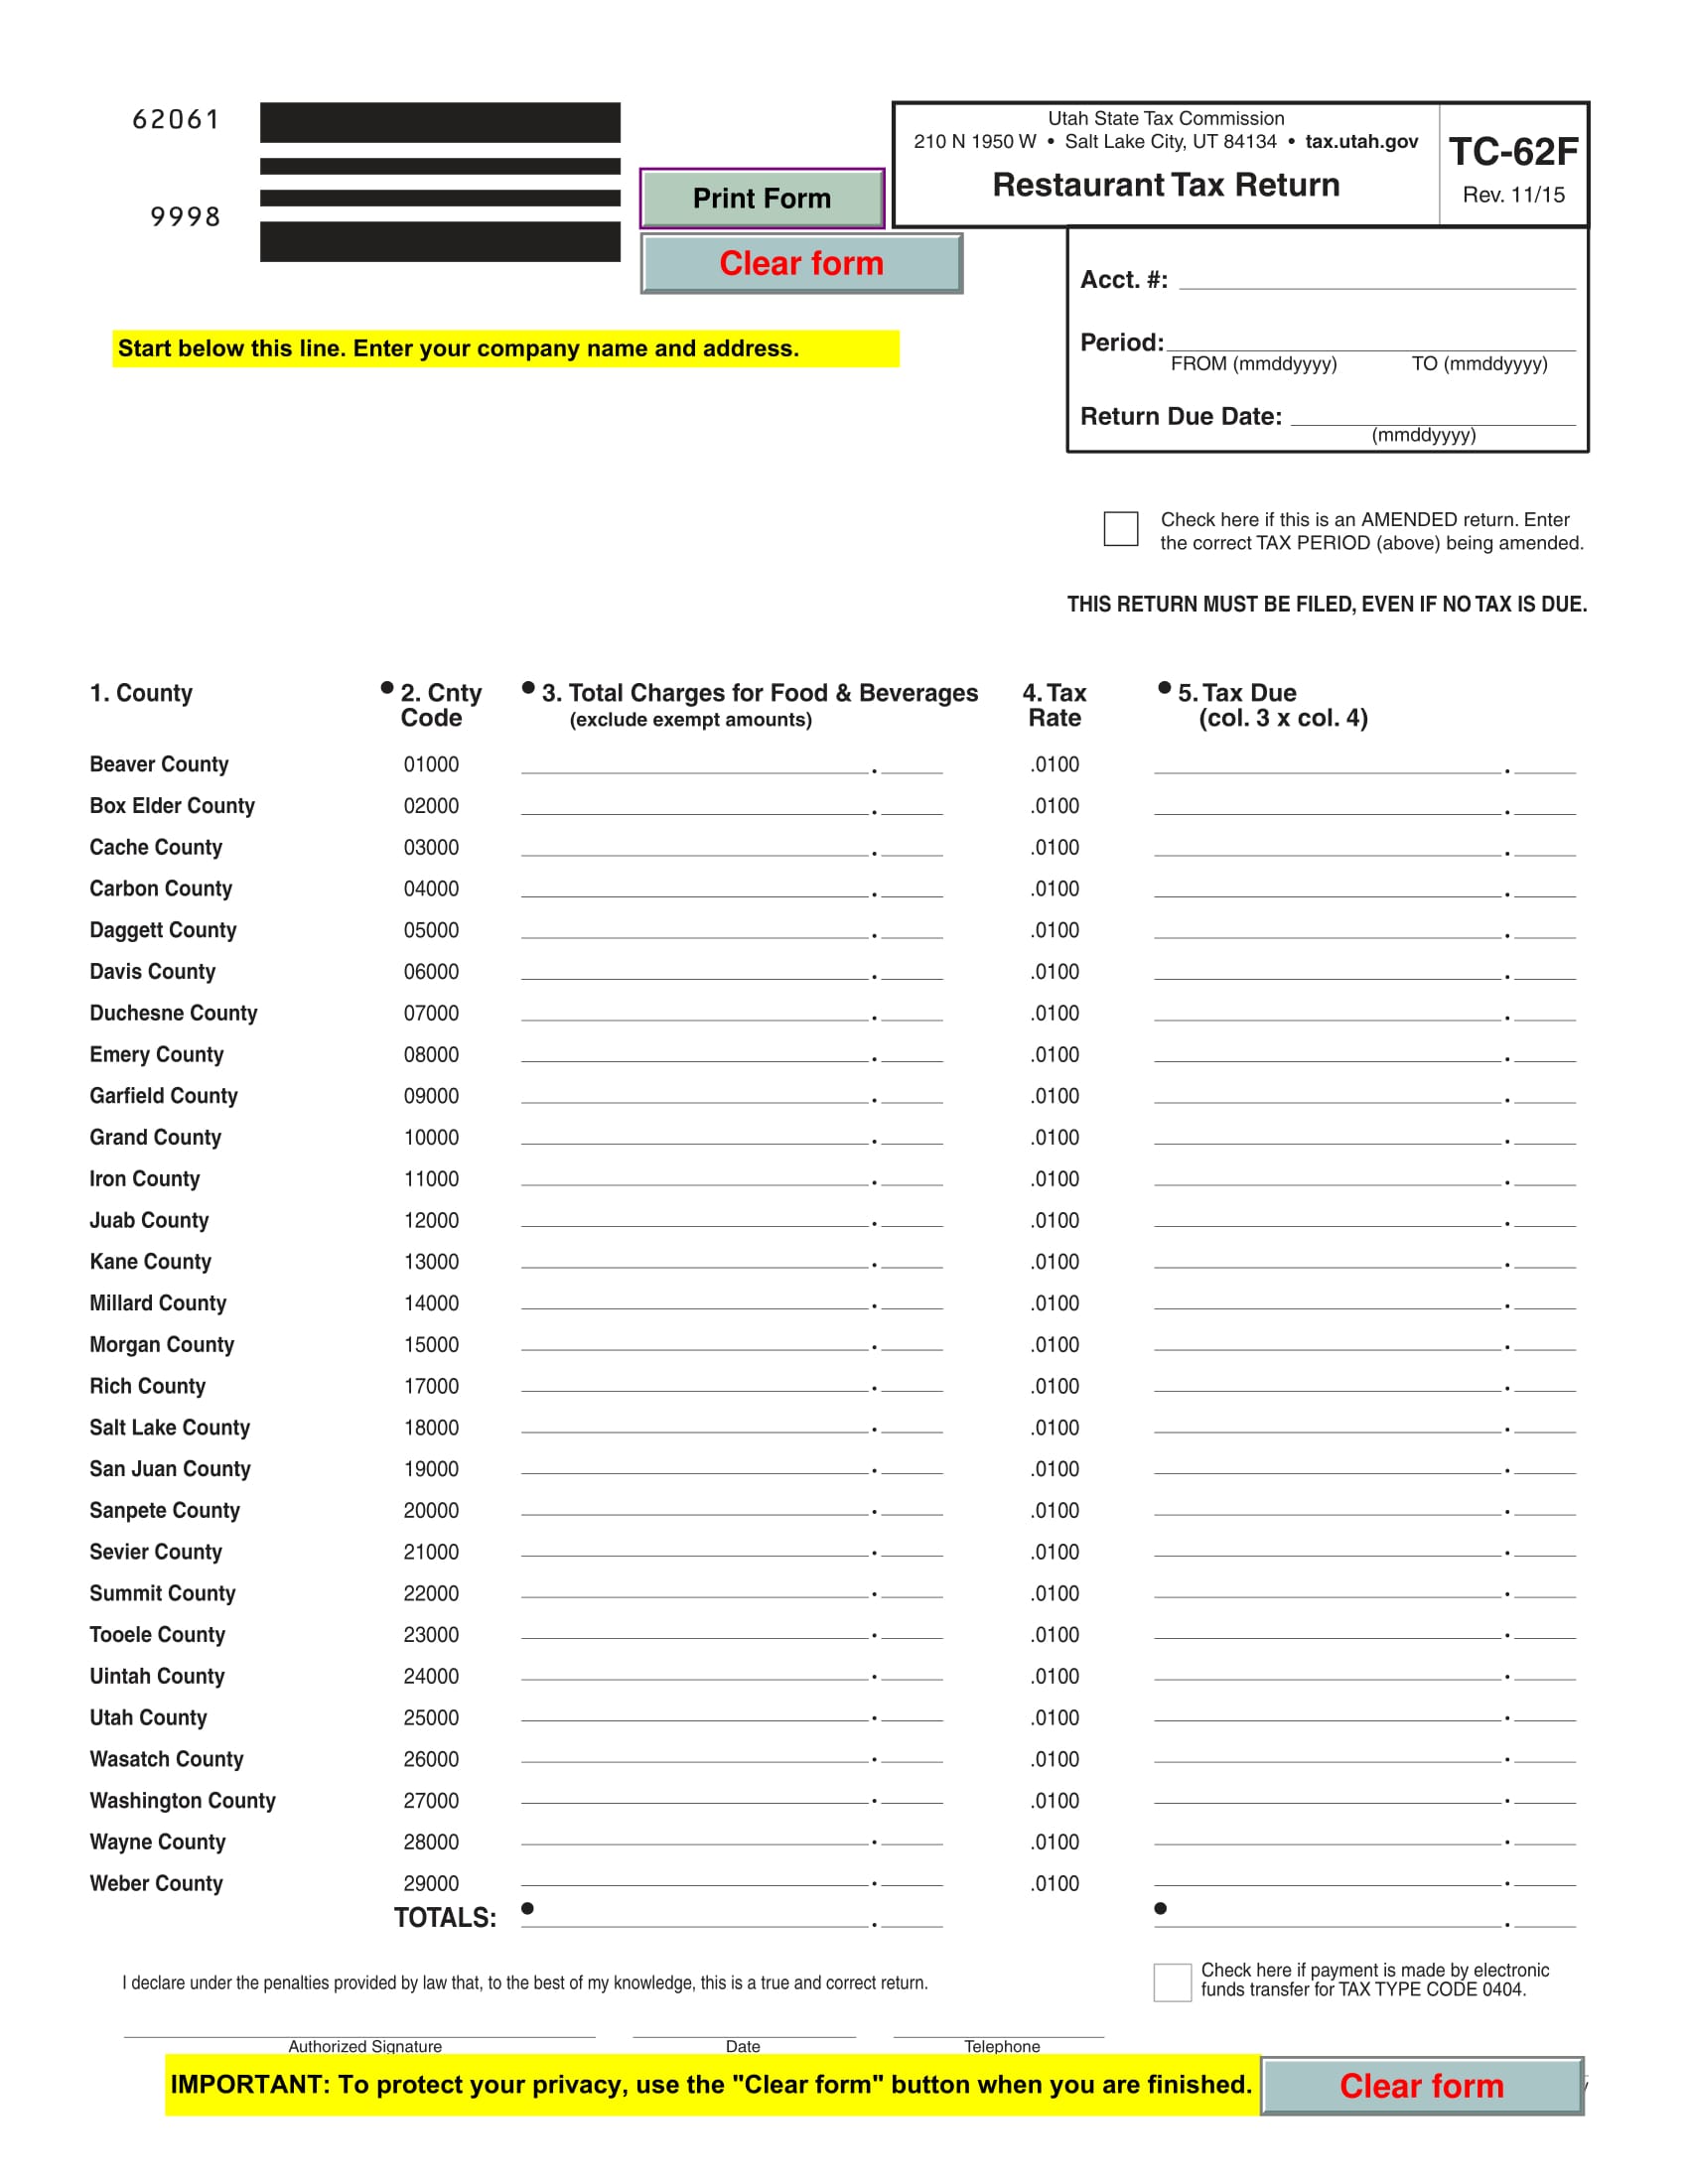 restaurant tax form sample 1